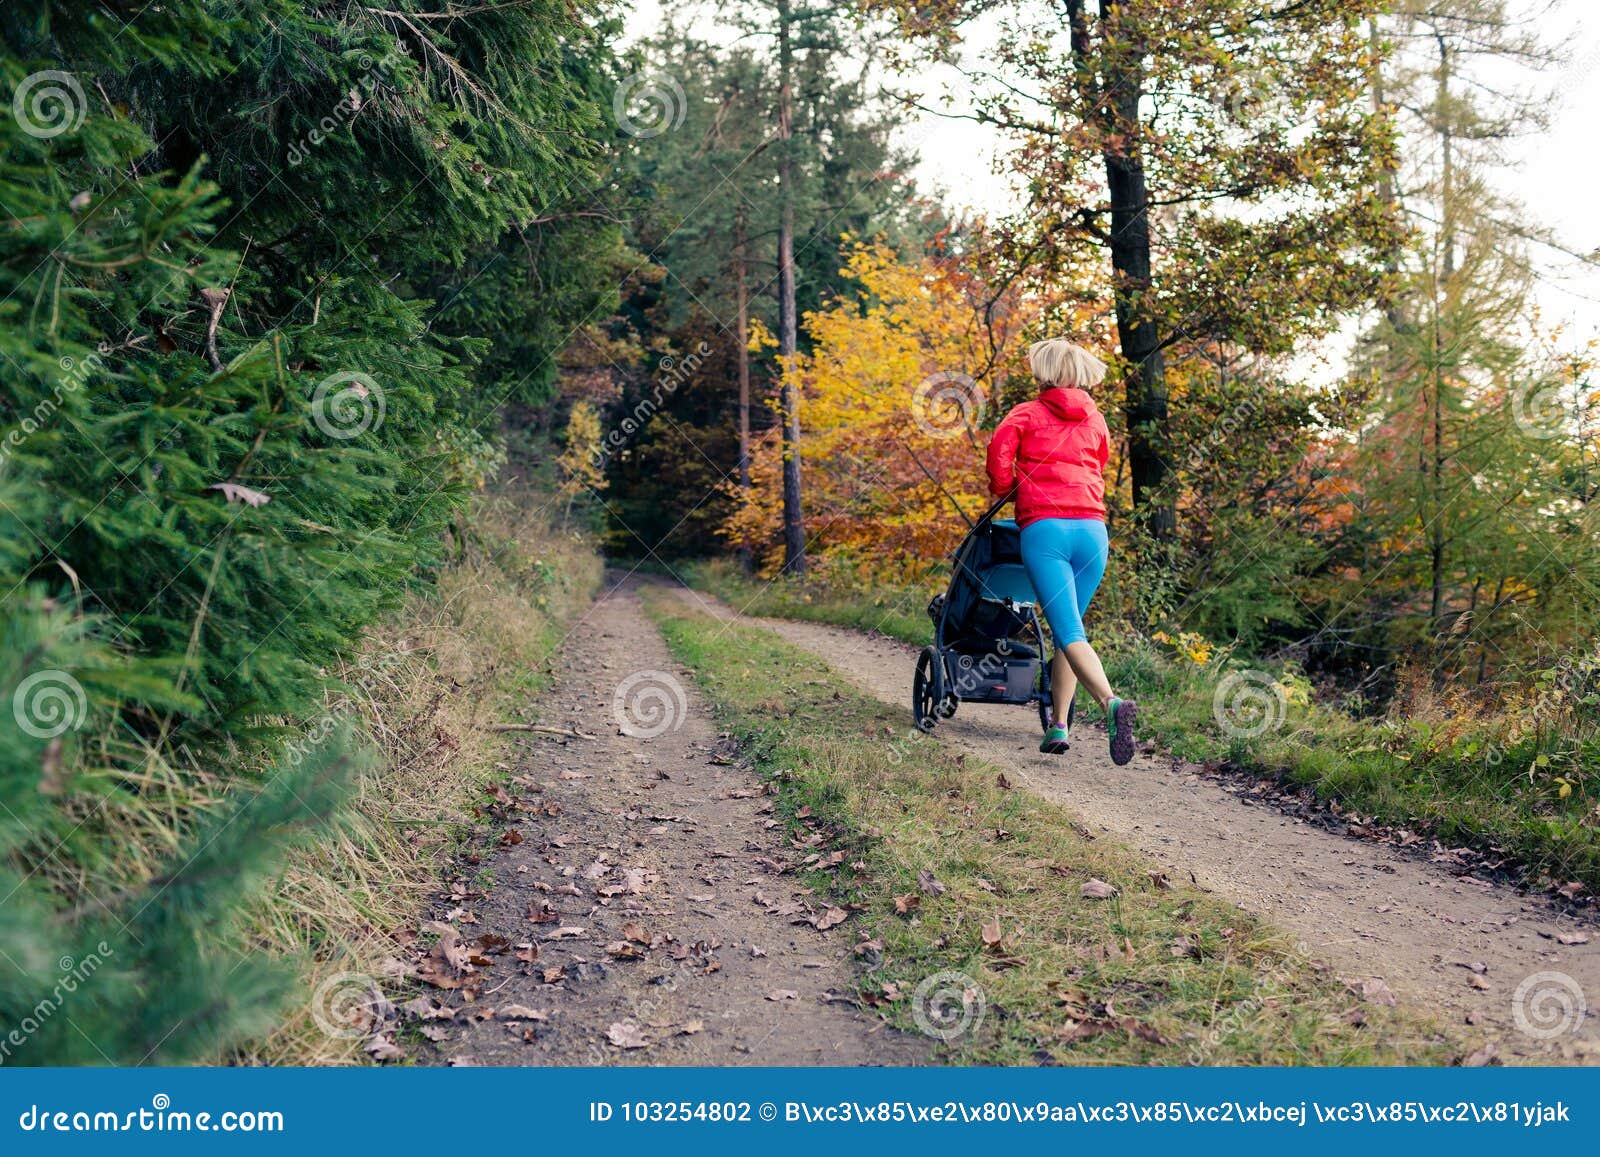 trail running stroller